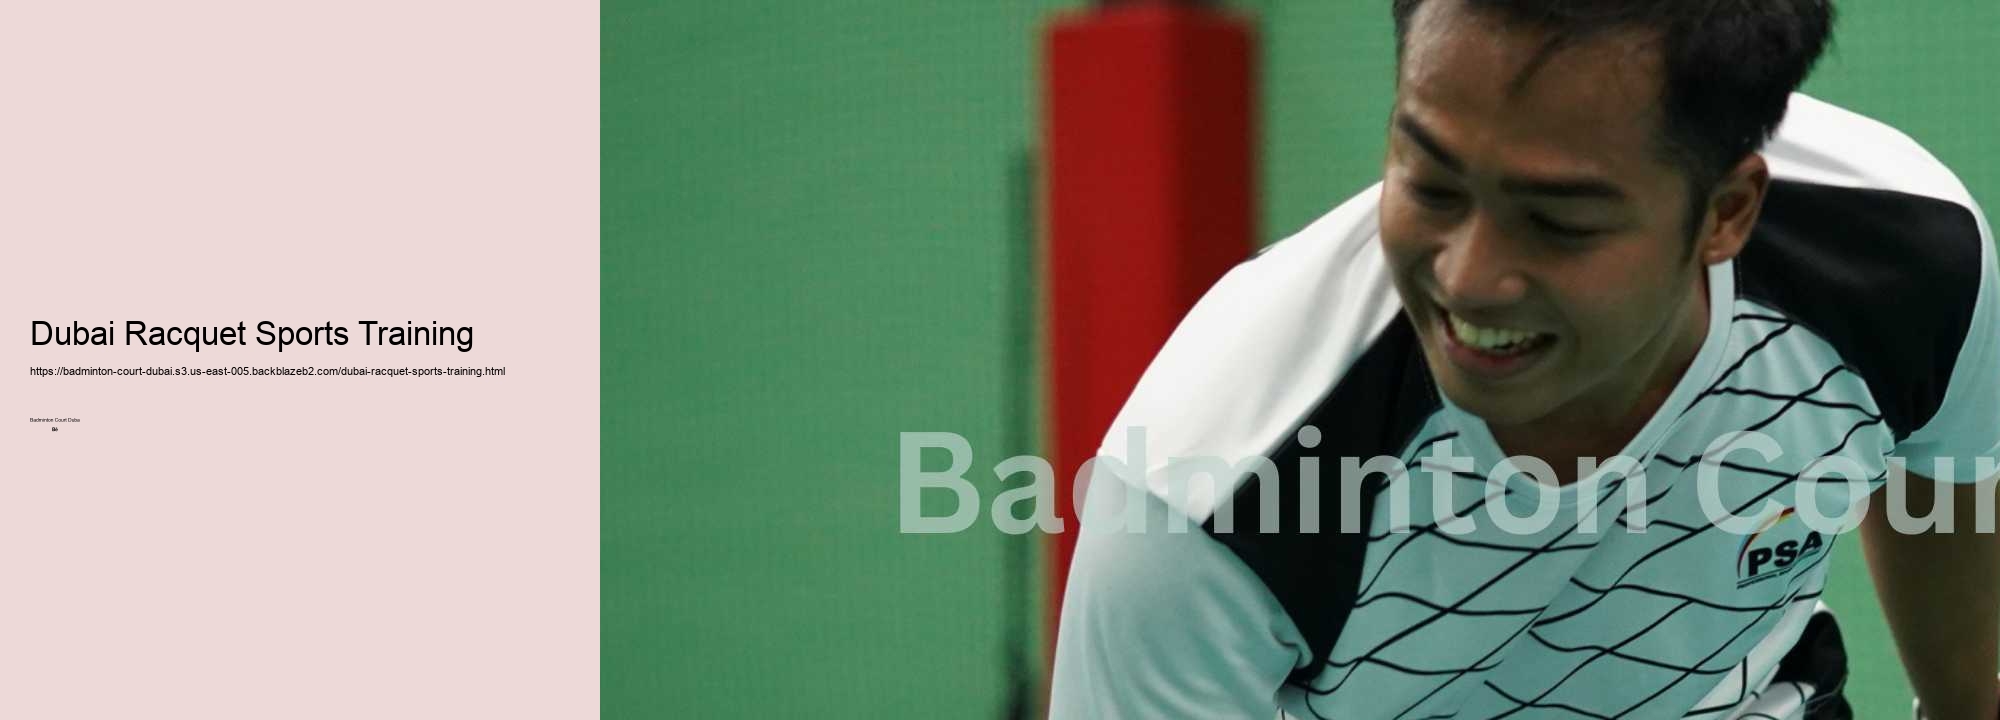 Dubai Racquet Sports Training